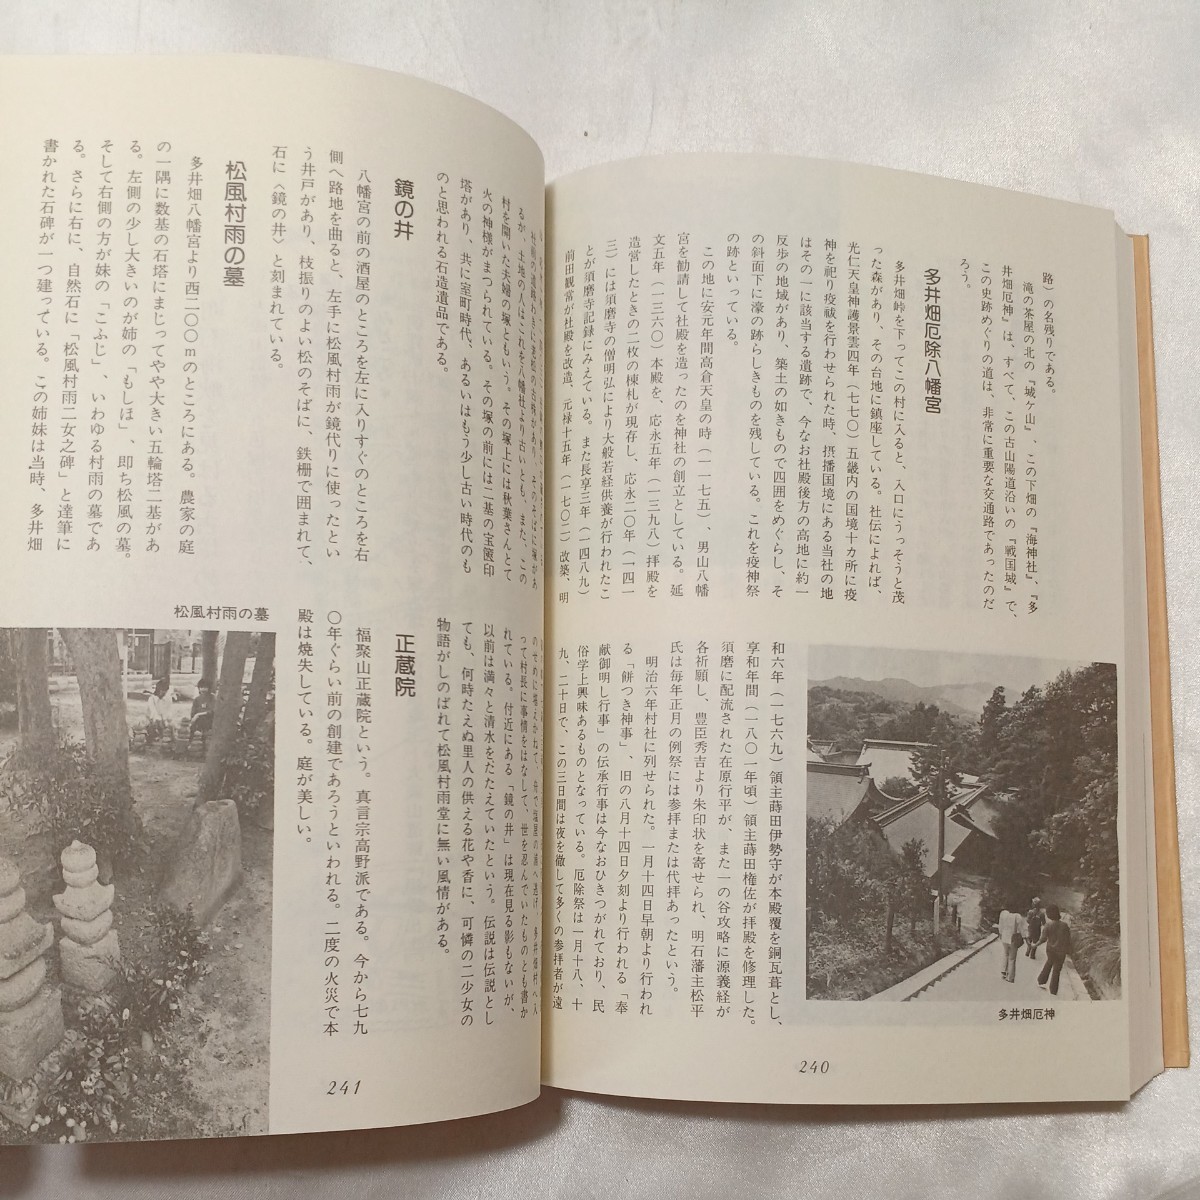 zaa-497♪史跡と坂のまち　神戸散歩　出版社 神戸市 刊行年 昭53　1978年 送料無料